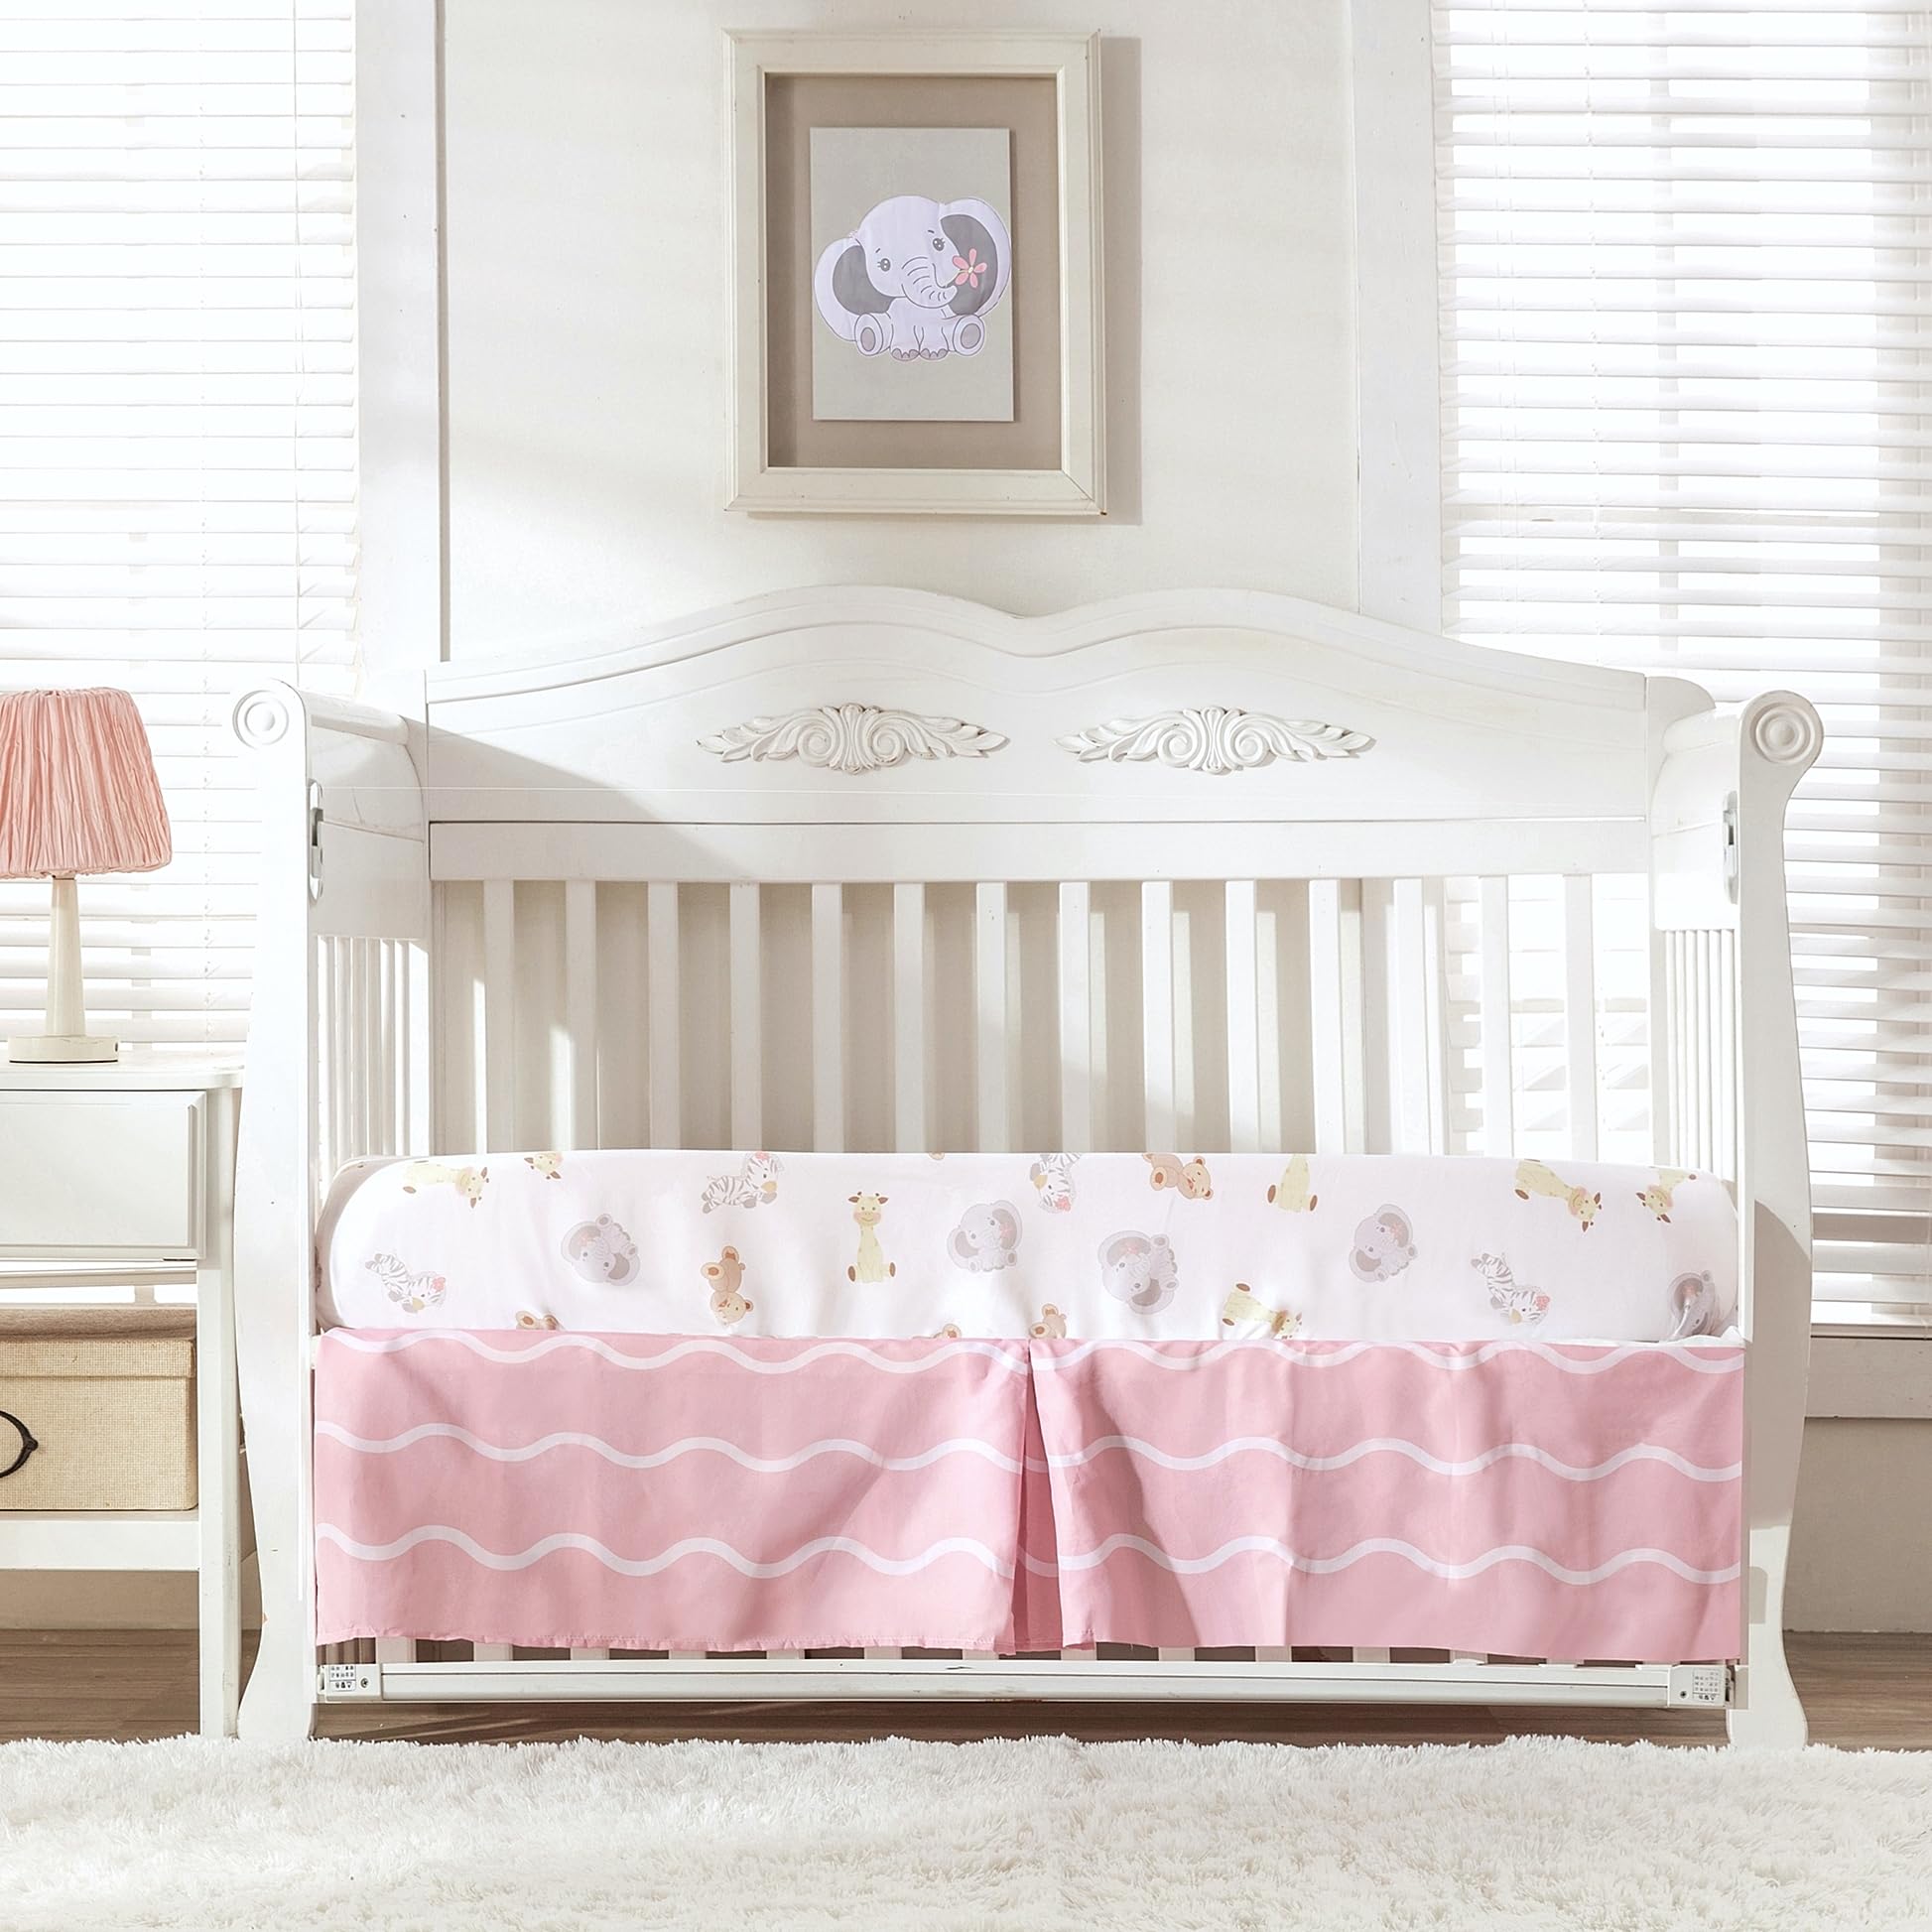 Baevellery Crib Bedding Set for Girls 3Piece Jungle Elephant Baby Girl Crib Bedding Set Nursery Crib Set for Baby Girl - Fitted Sheet Crib Comforter Crib Skirt